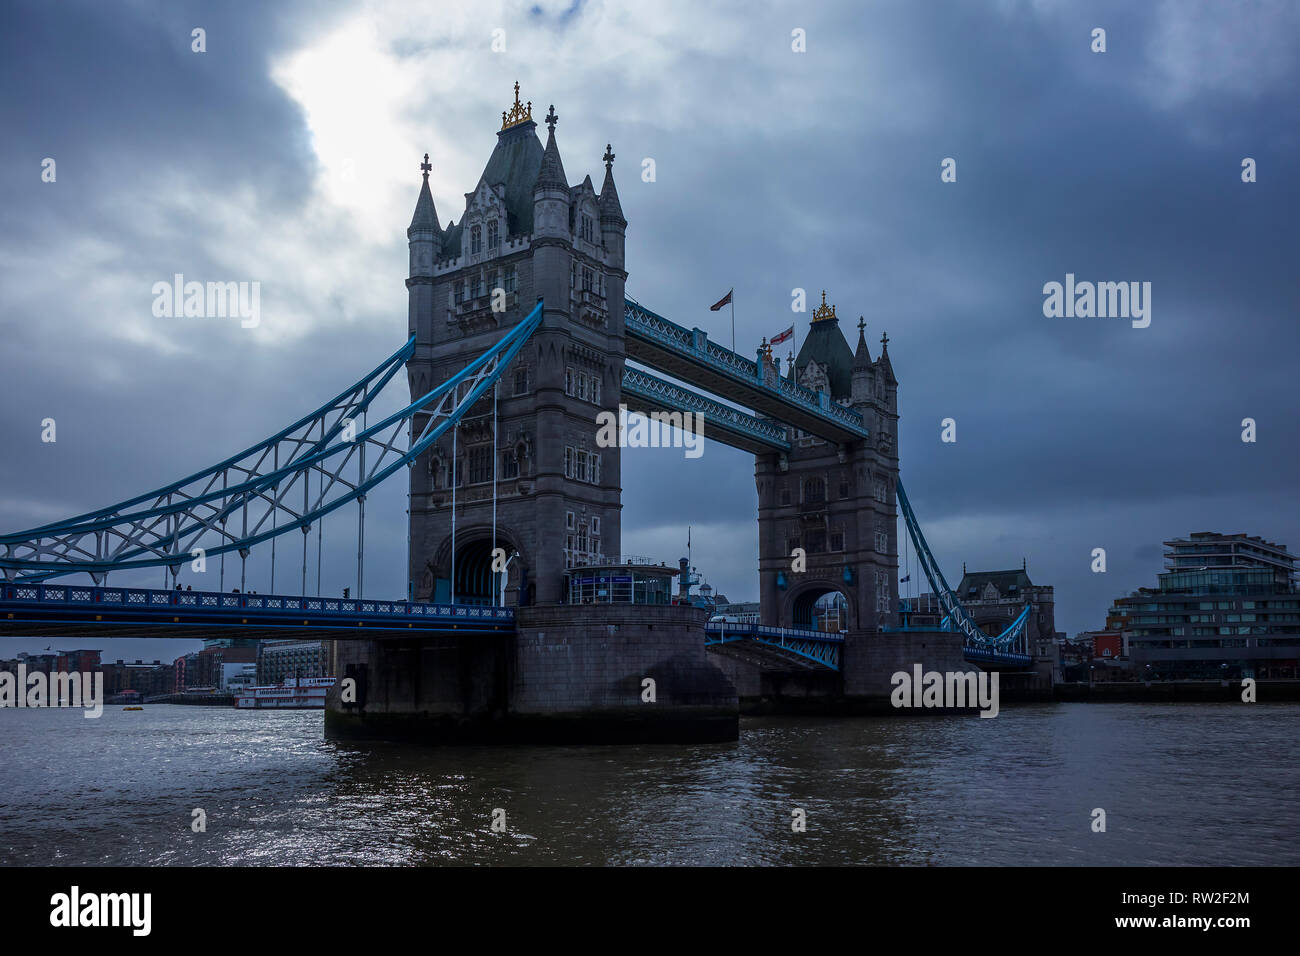 London, England - 28. Februar 2019, die berühmte Tower Bridge über die Themse mit bewölktem Himmel im Winter Stockfoto